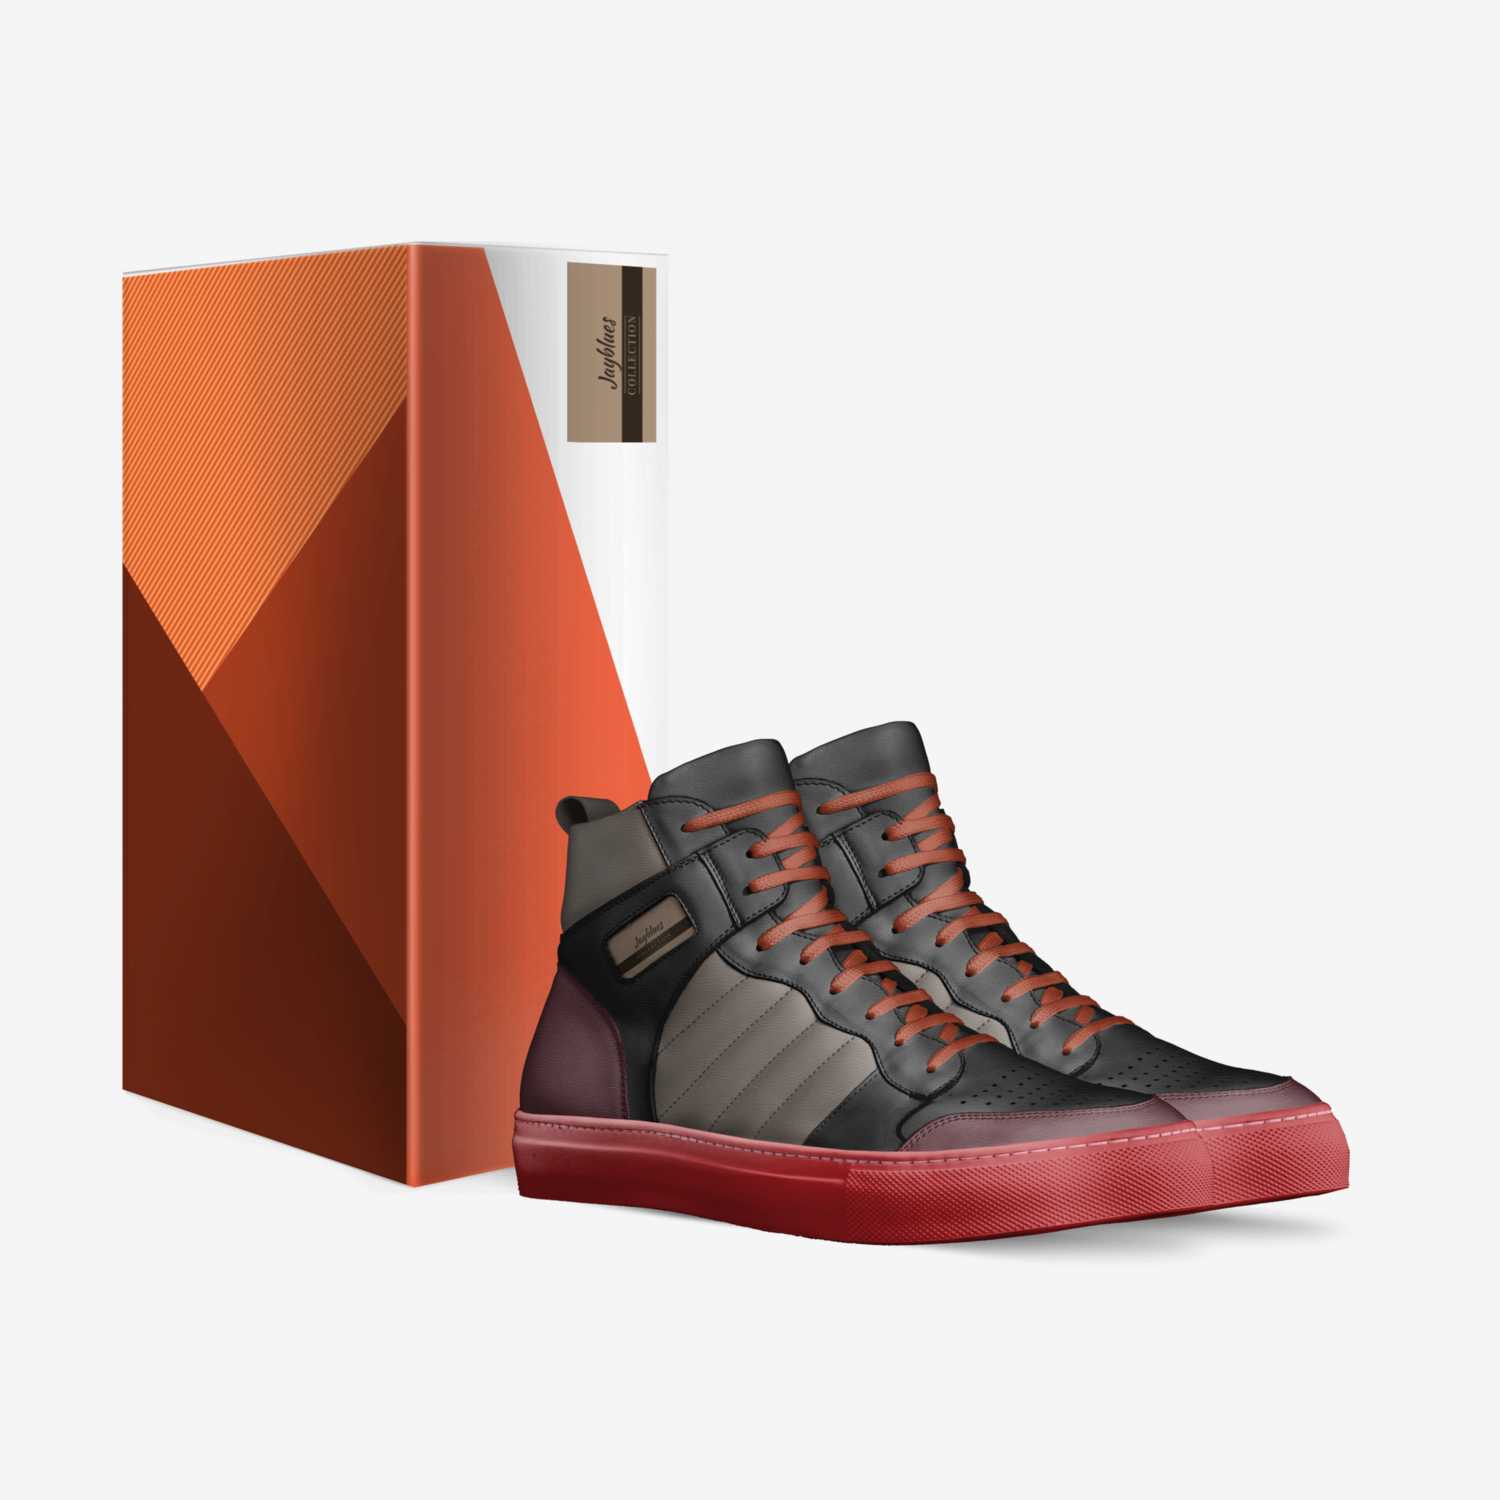 Jayblues custom made in Italy shoes by Jayden | Box view